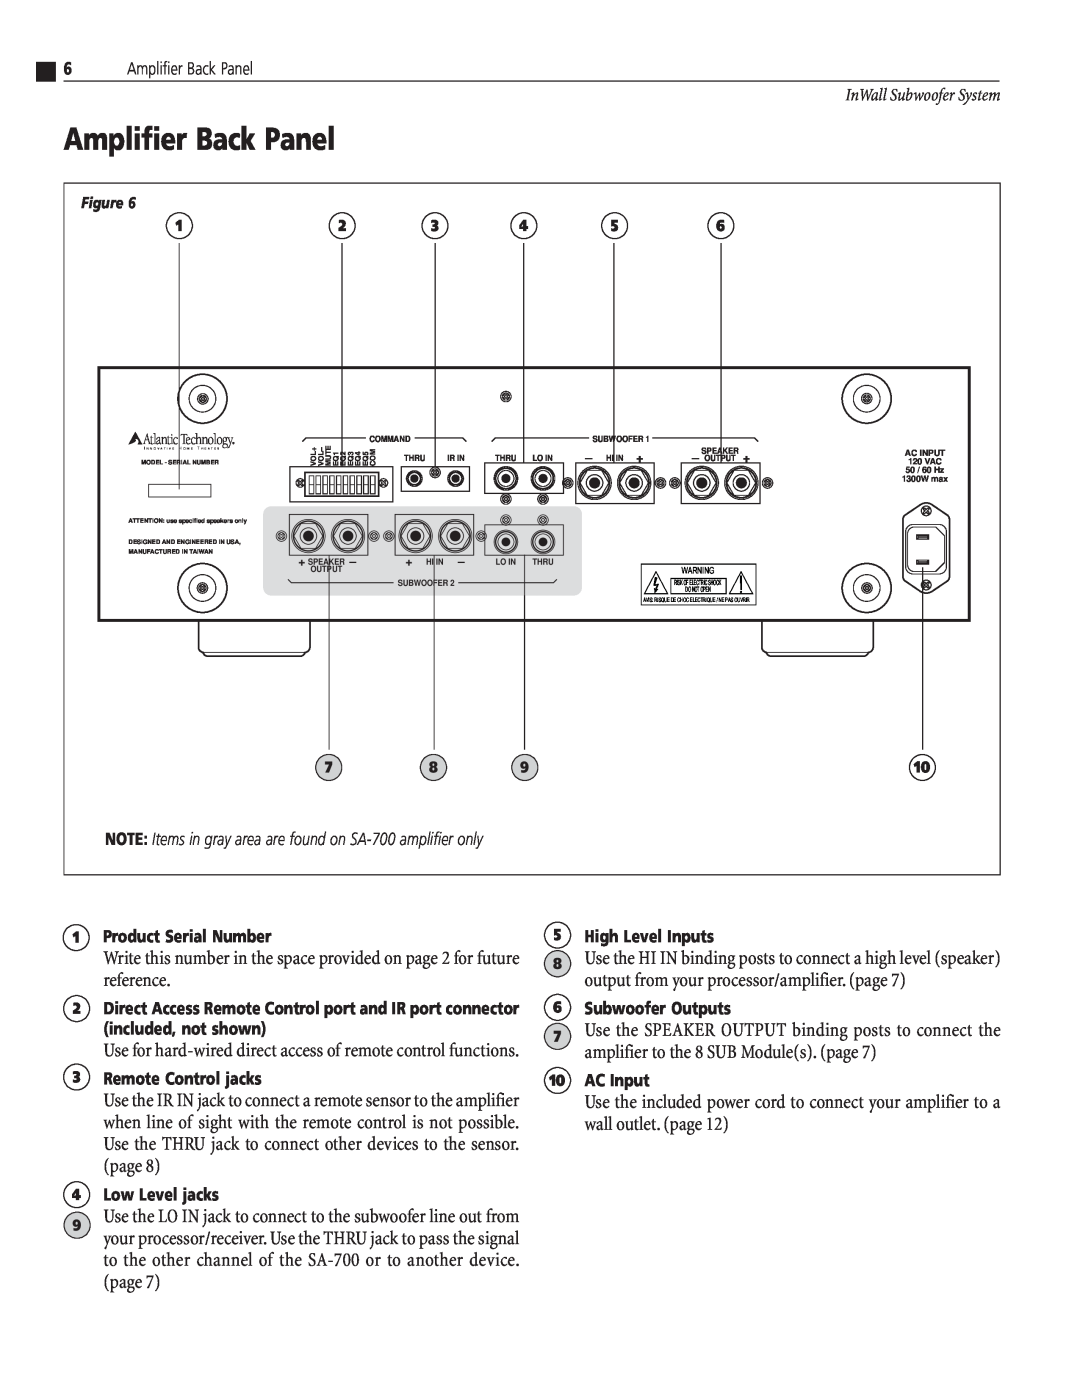 Atlantic Technology SA-350 Mono Amplifier Back Panel, 1Product Serial Number, 3Remote Control jacks, 4Low Level jacks 